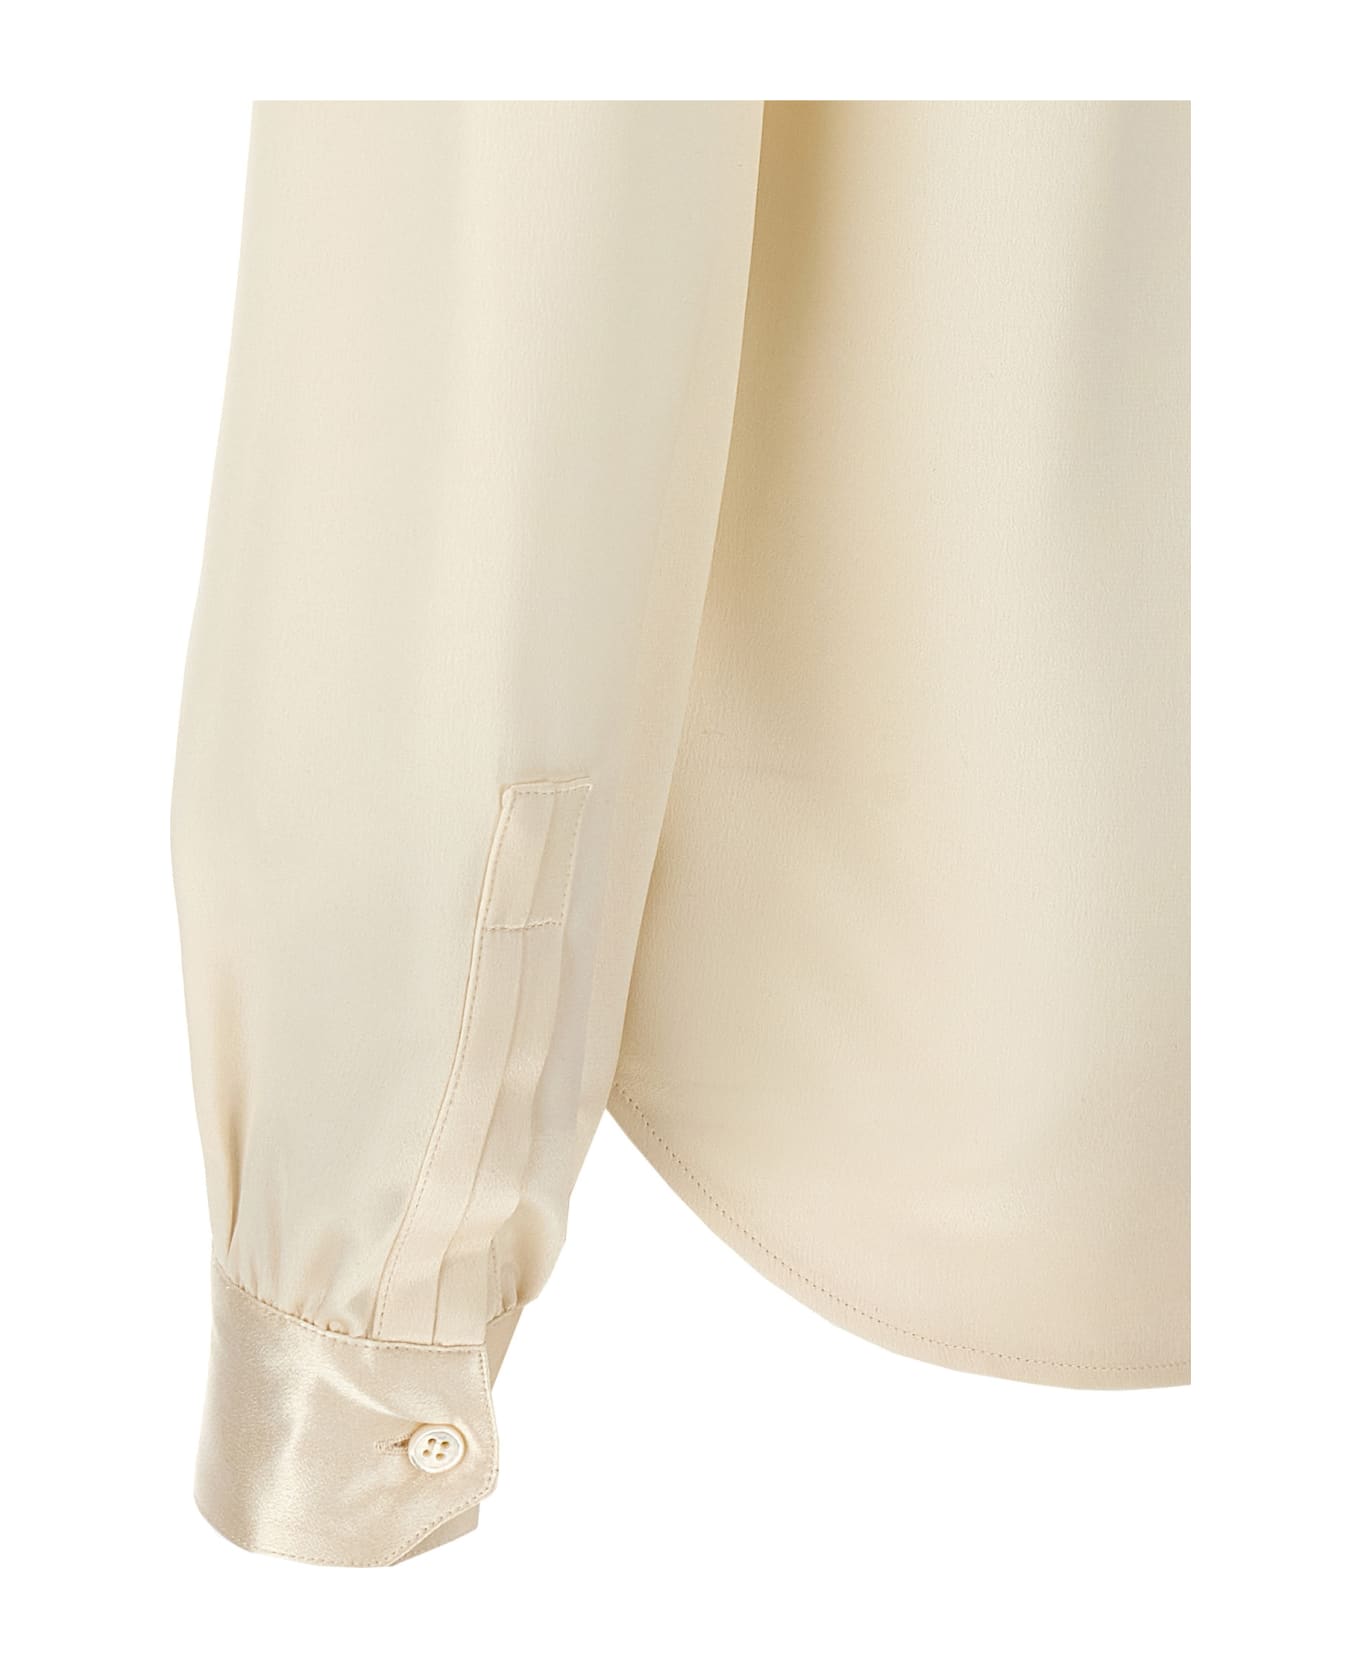 Saint Laurent Lavalliere Silk Shirt - White